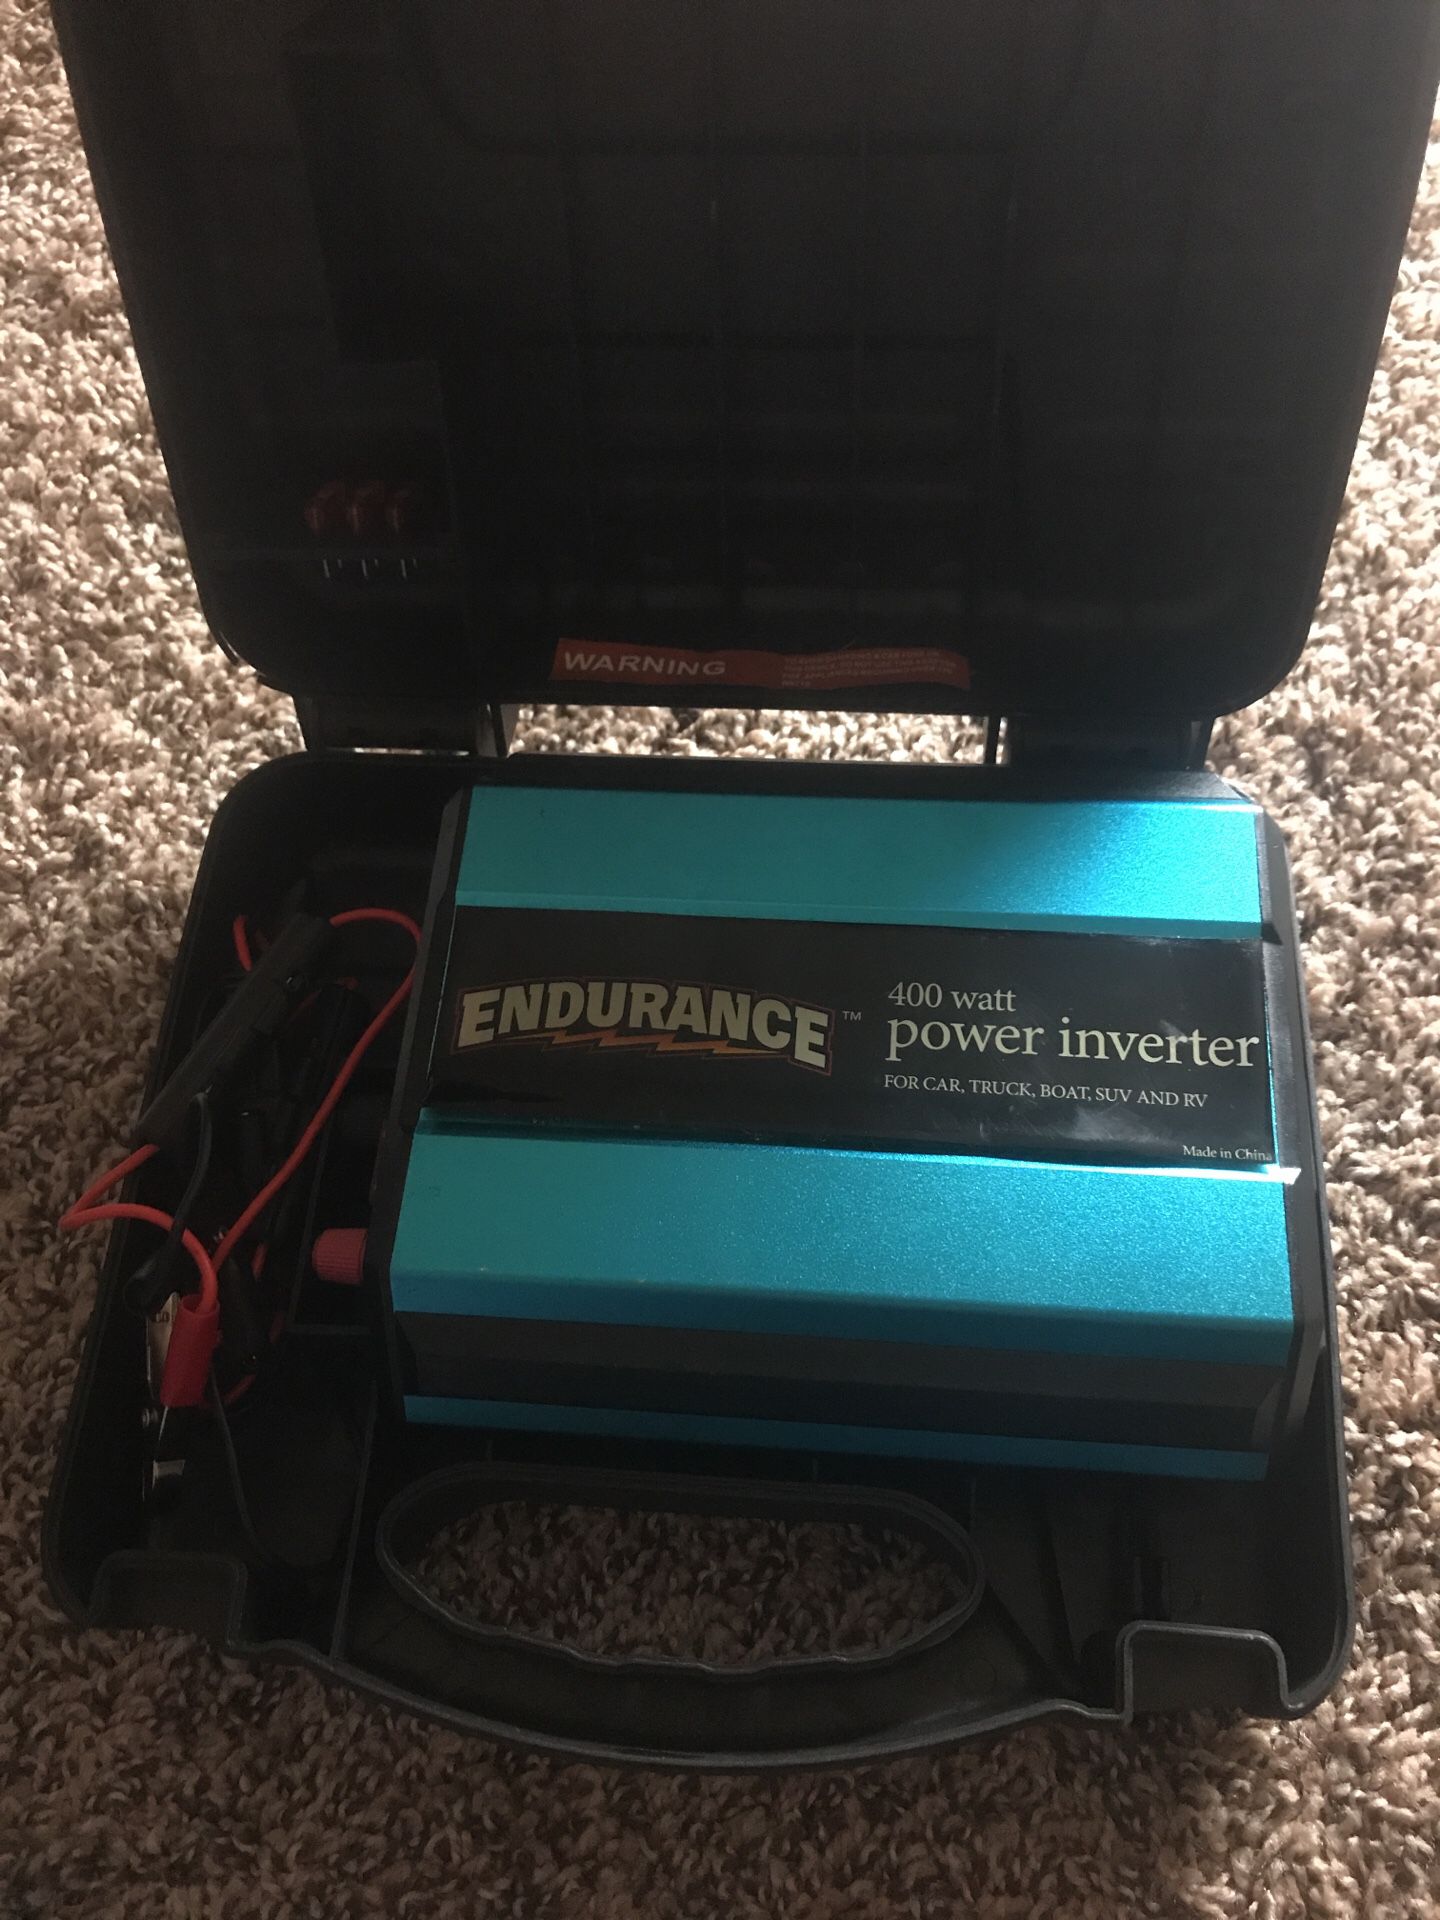 Endurance 400 watt power inverter